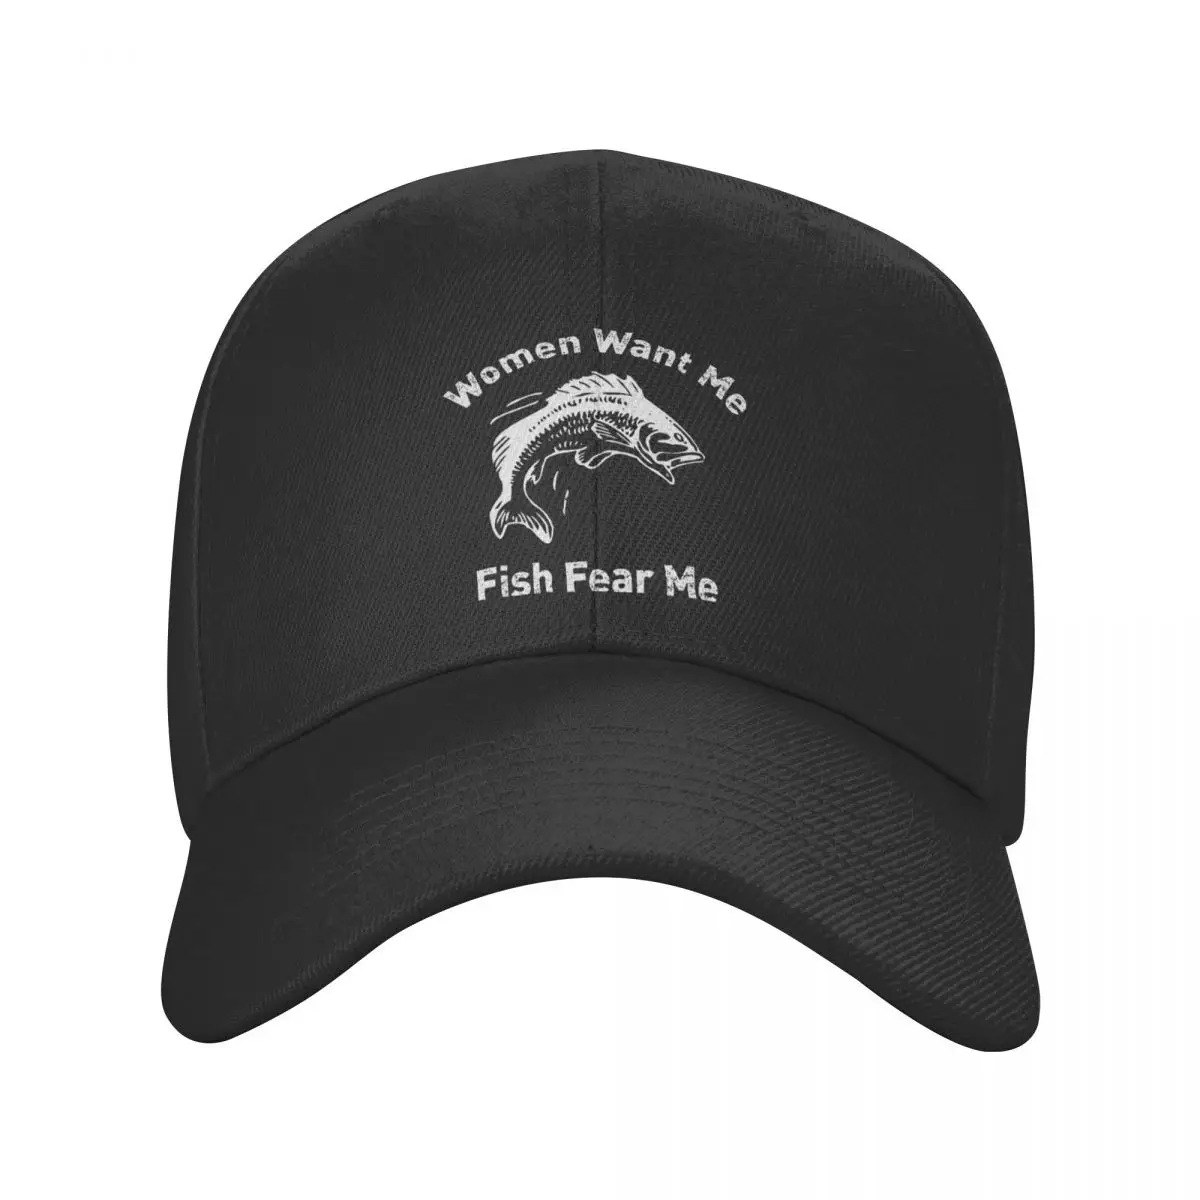 Women Want Me Fish Fear Me Baseball Cap Hip Hop Women Men's Adjustable Fisherman Fishing Dad Hat Spring Snapback Caps